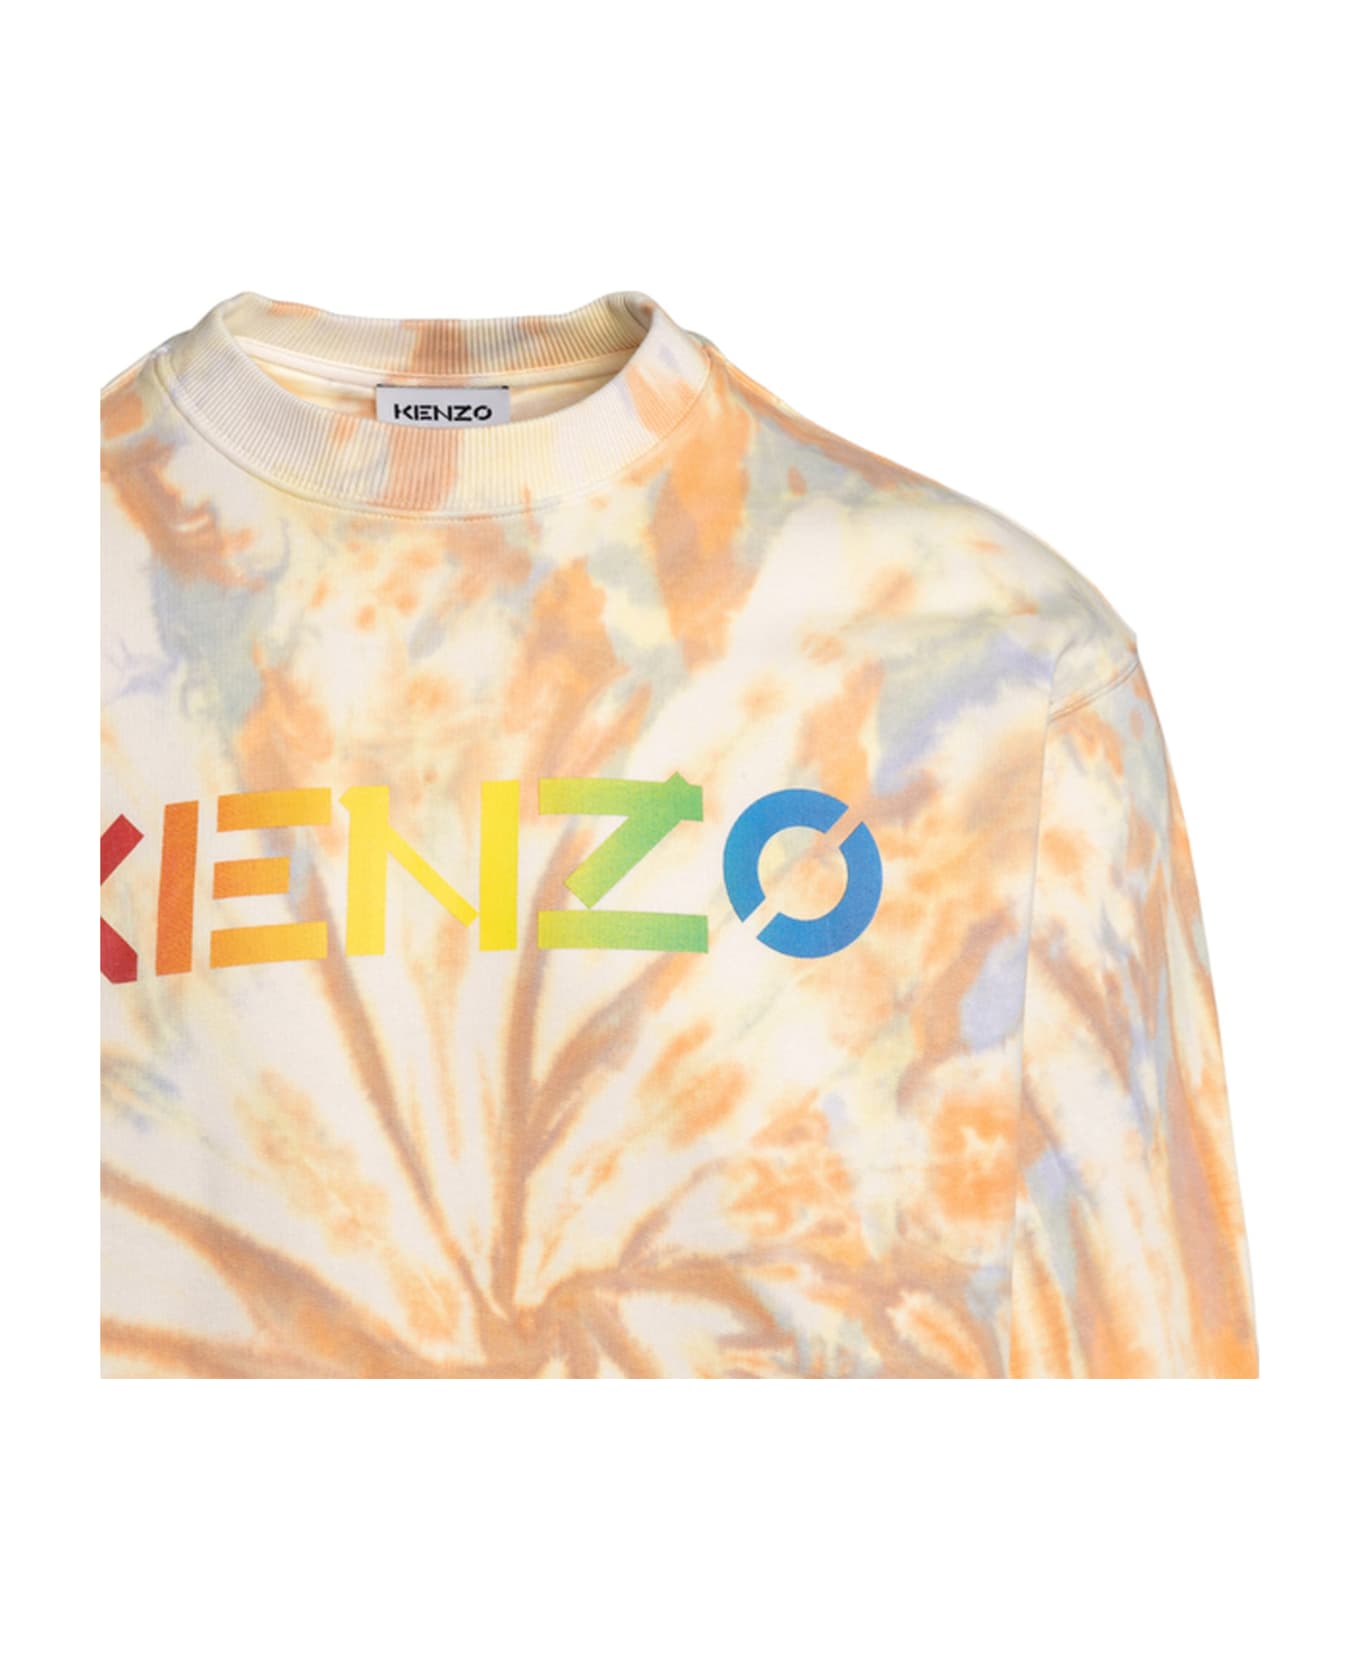 Kenzo Cotton Logo Sweatshirt - Orange